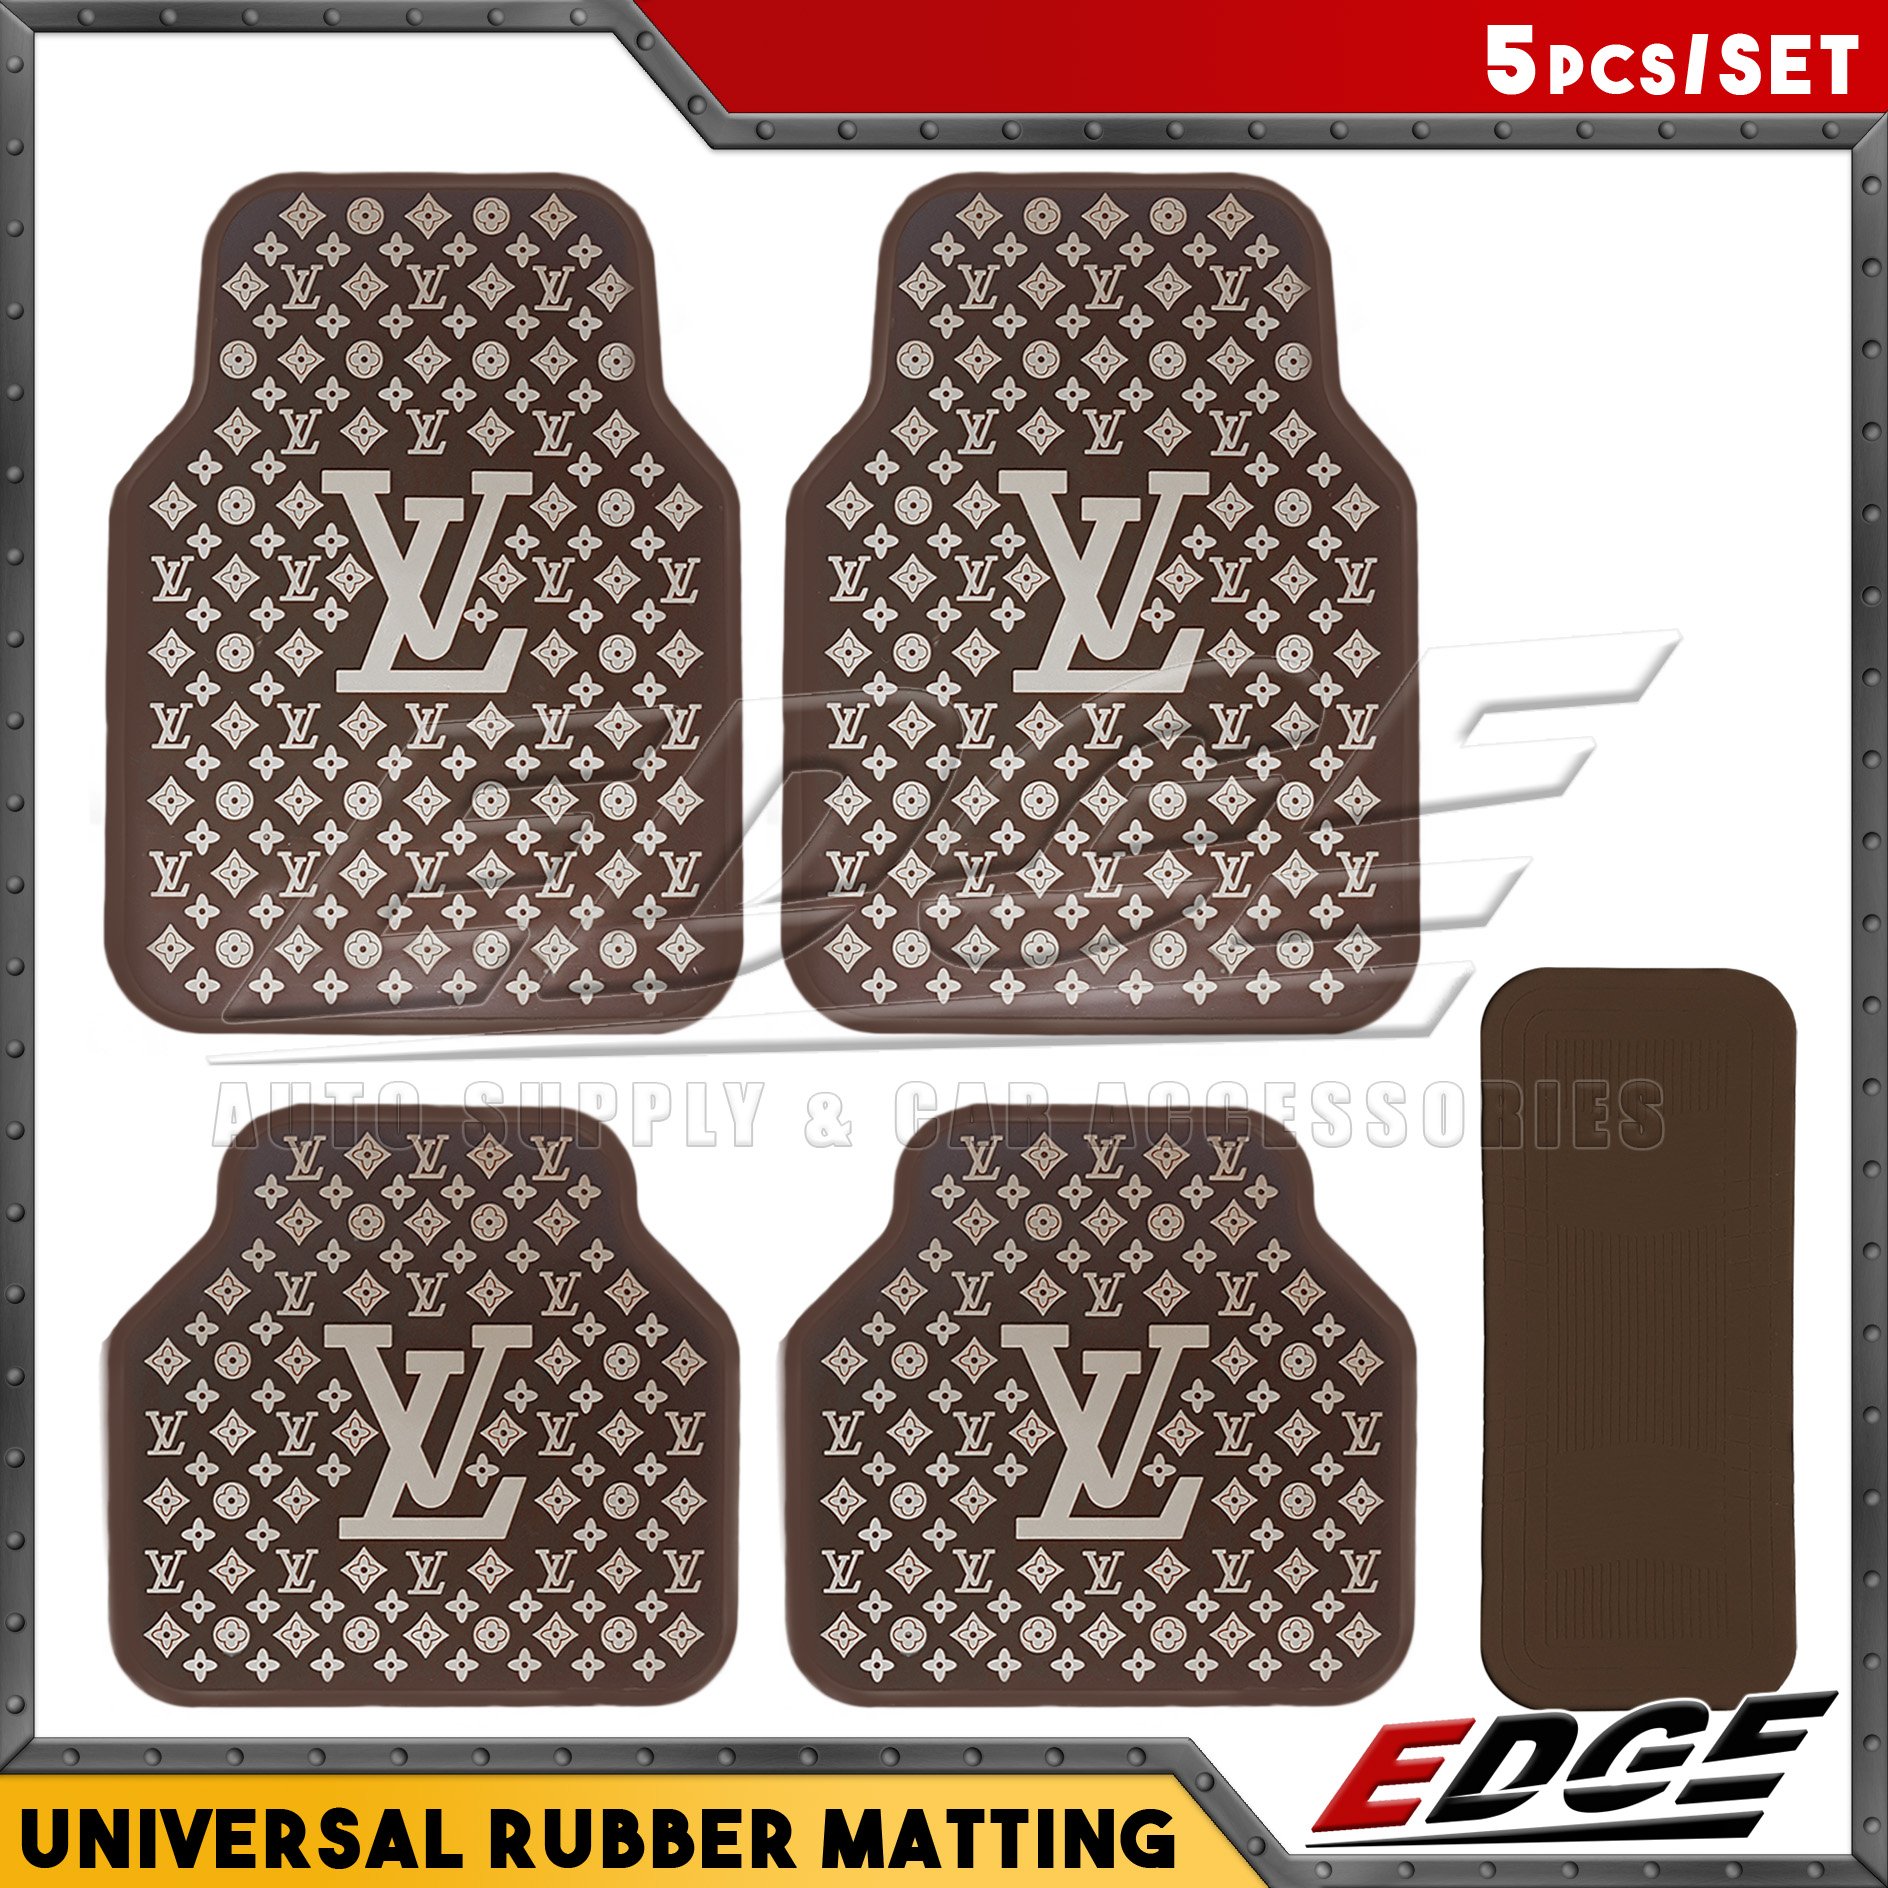 Universal Rubber Matting - LV - 5pcs/set // 5in1 car mat lv